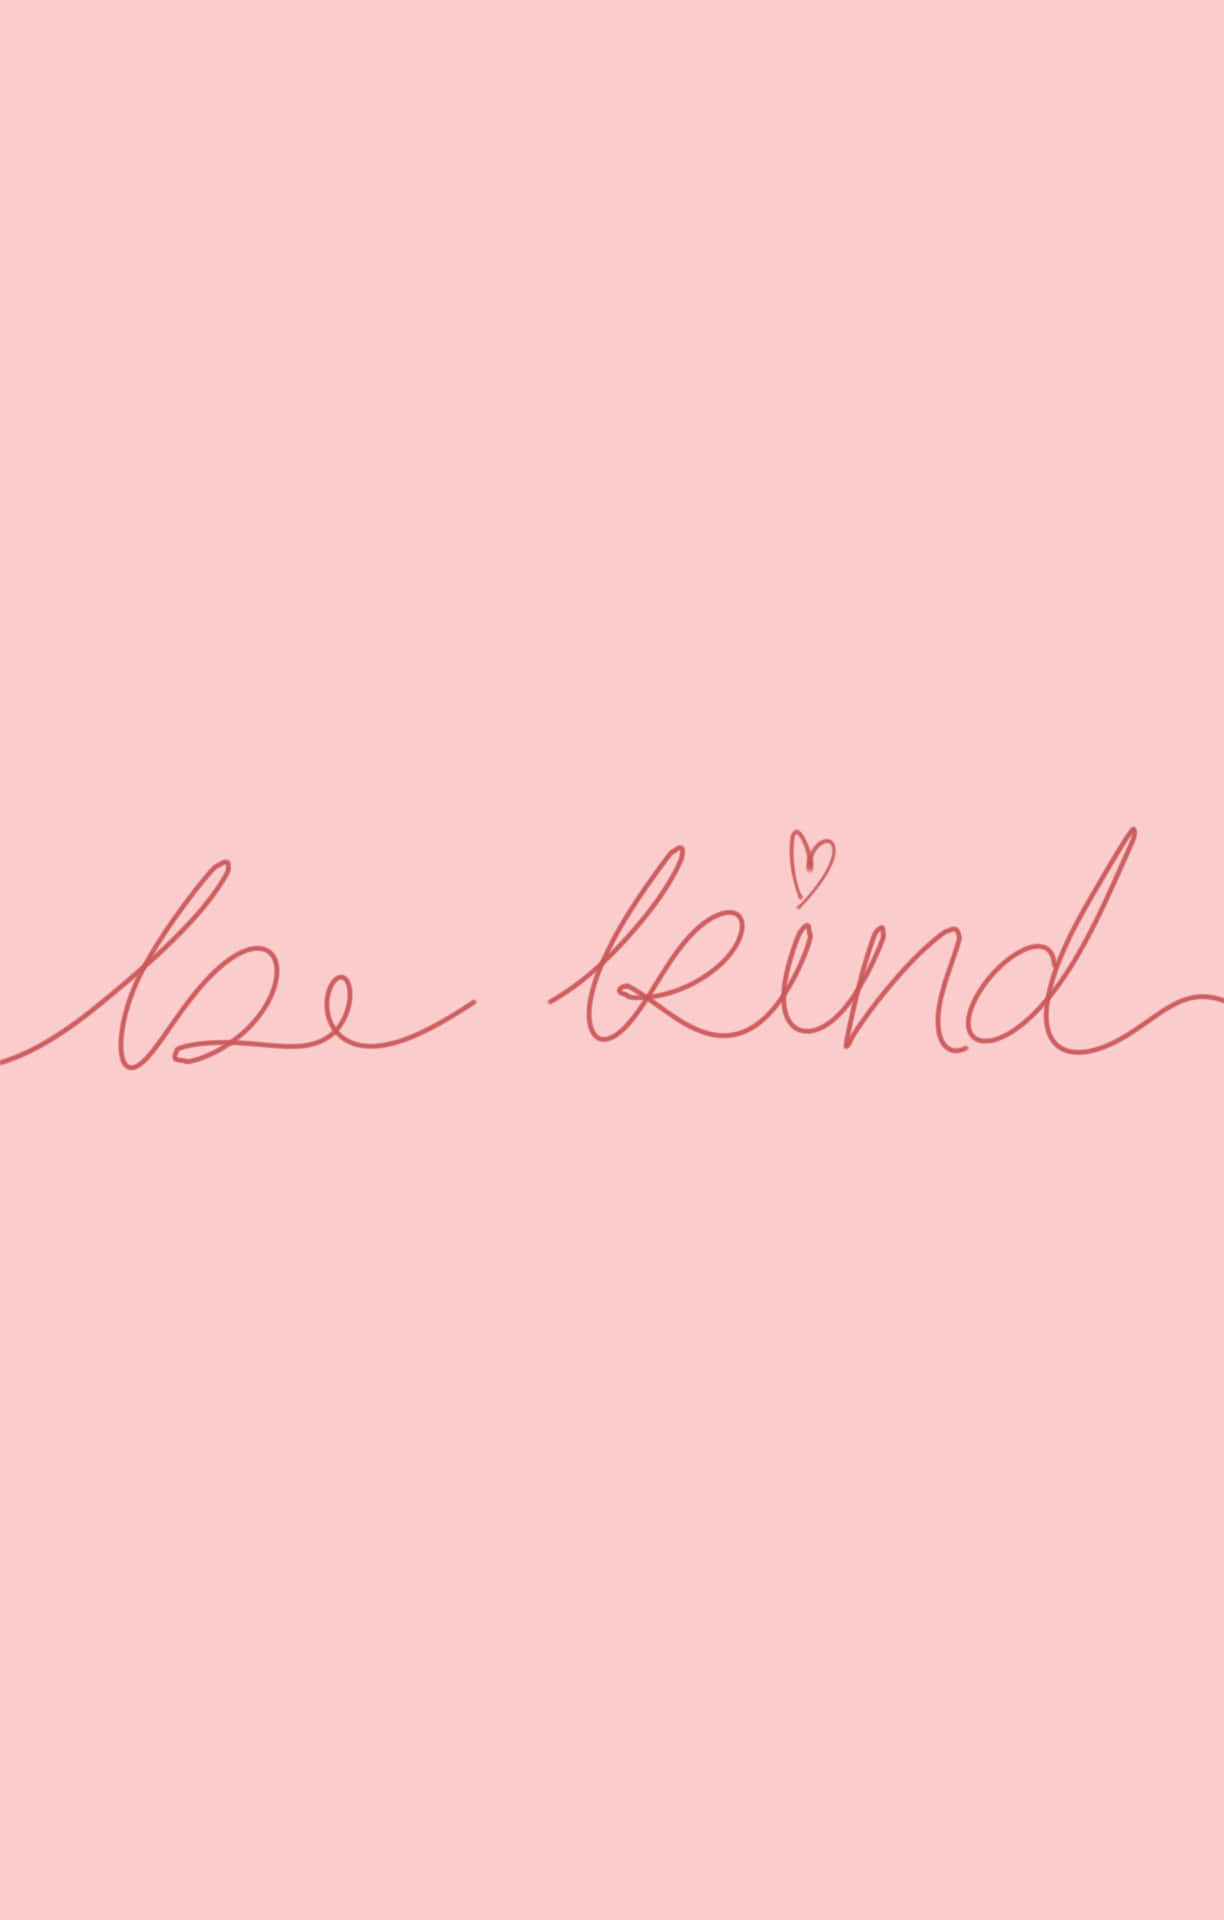 Be Kind Handwritten Text On Pink Background Wallpaper